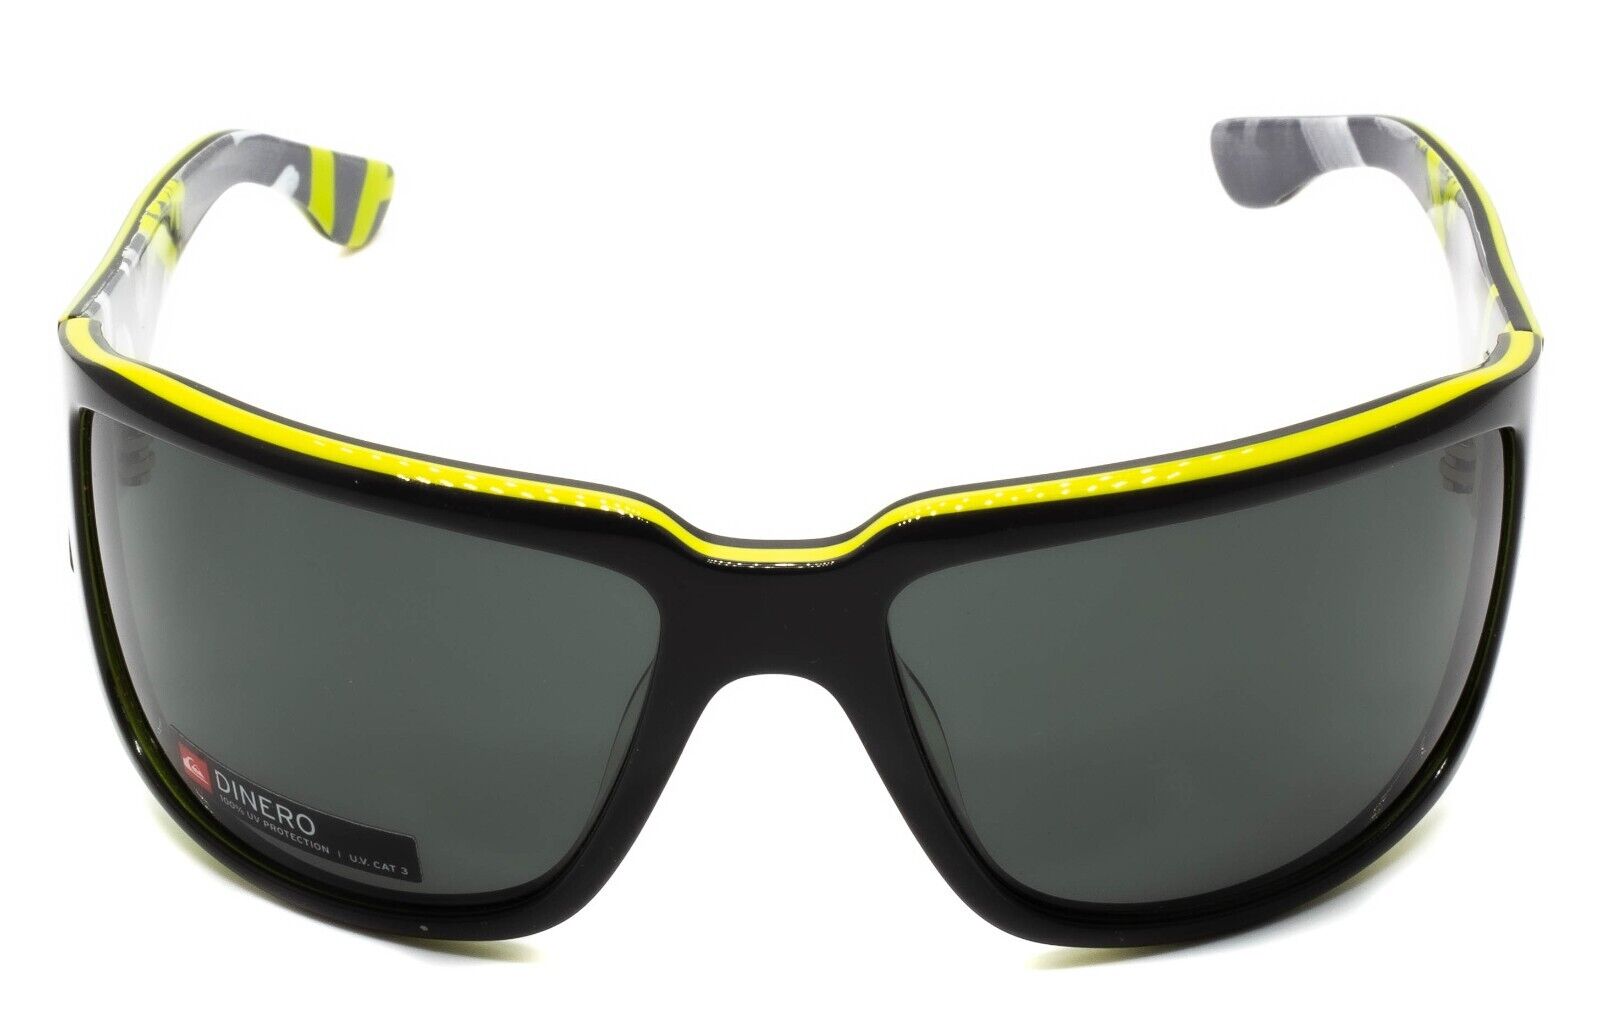 Sunglasses CAT UV Glasses Eyewear DINERO 3 - Eyewear GGV QUIKSILVER EQS1104/XSSG Shades 64mm